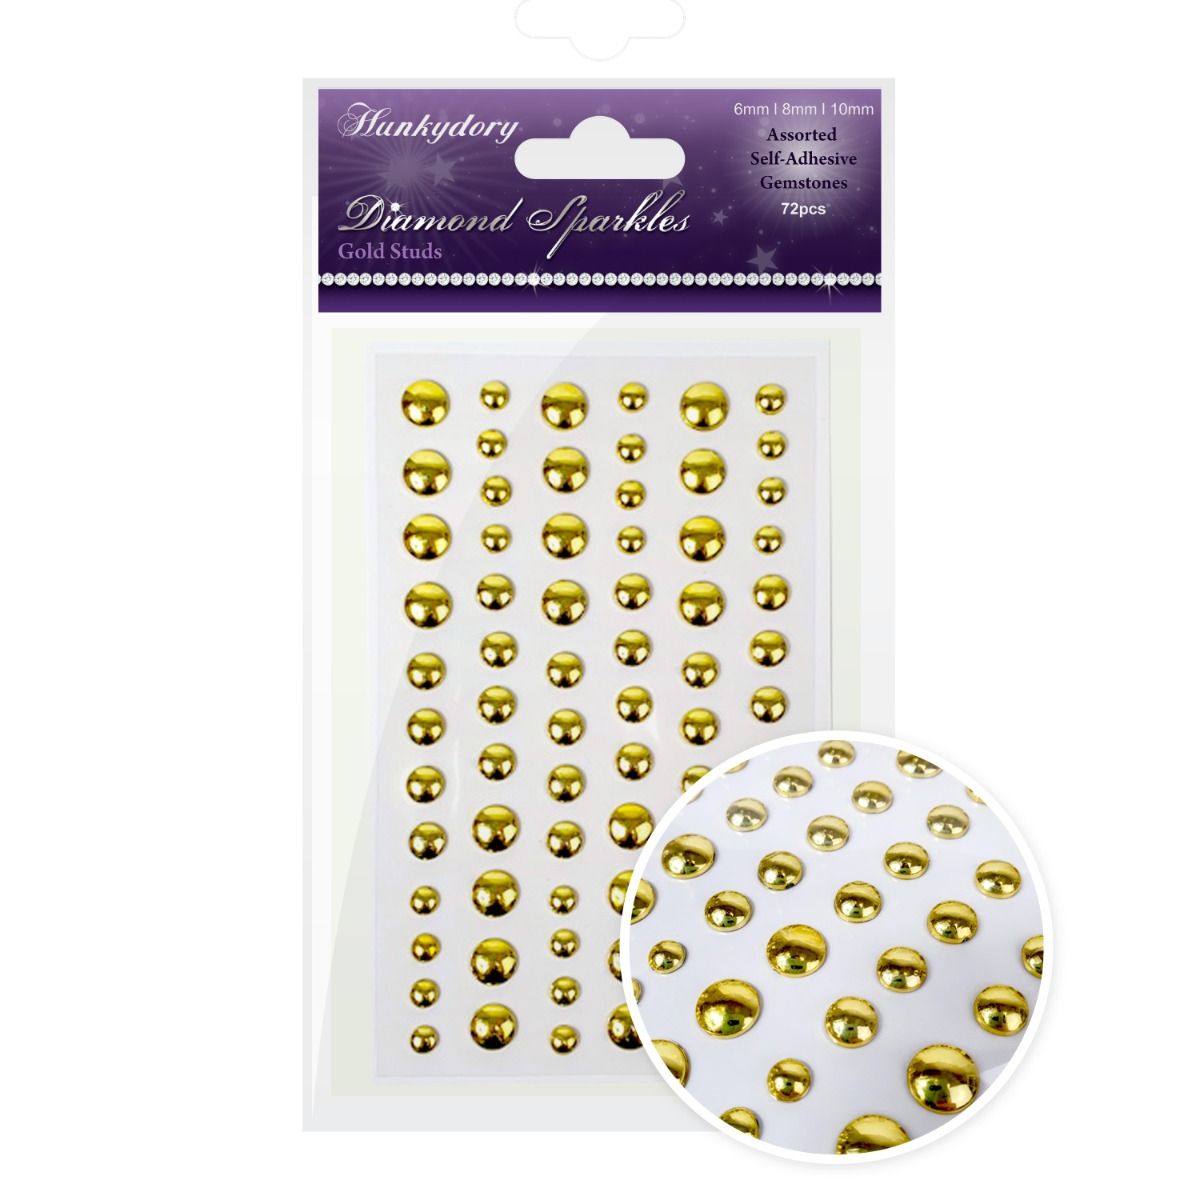 Diamond Sparkles Gemstones - Gold Studs